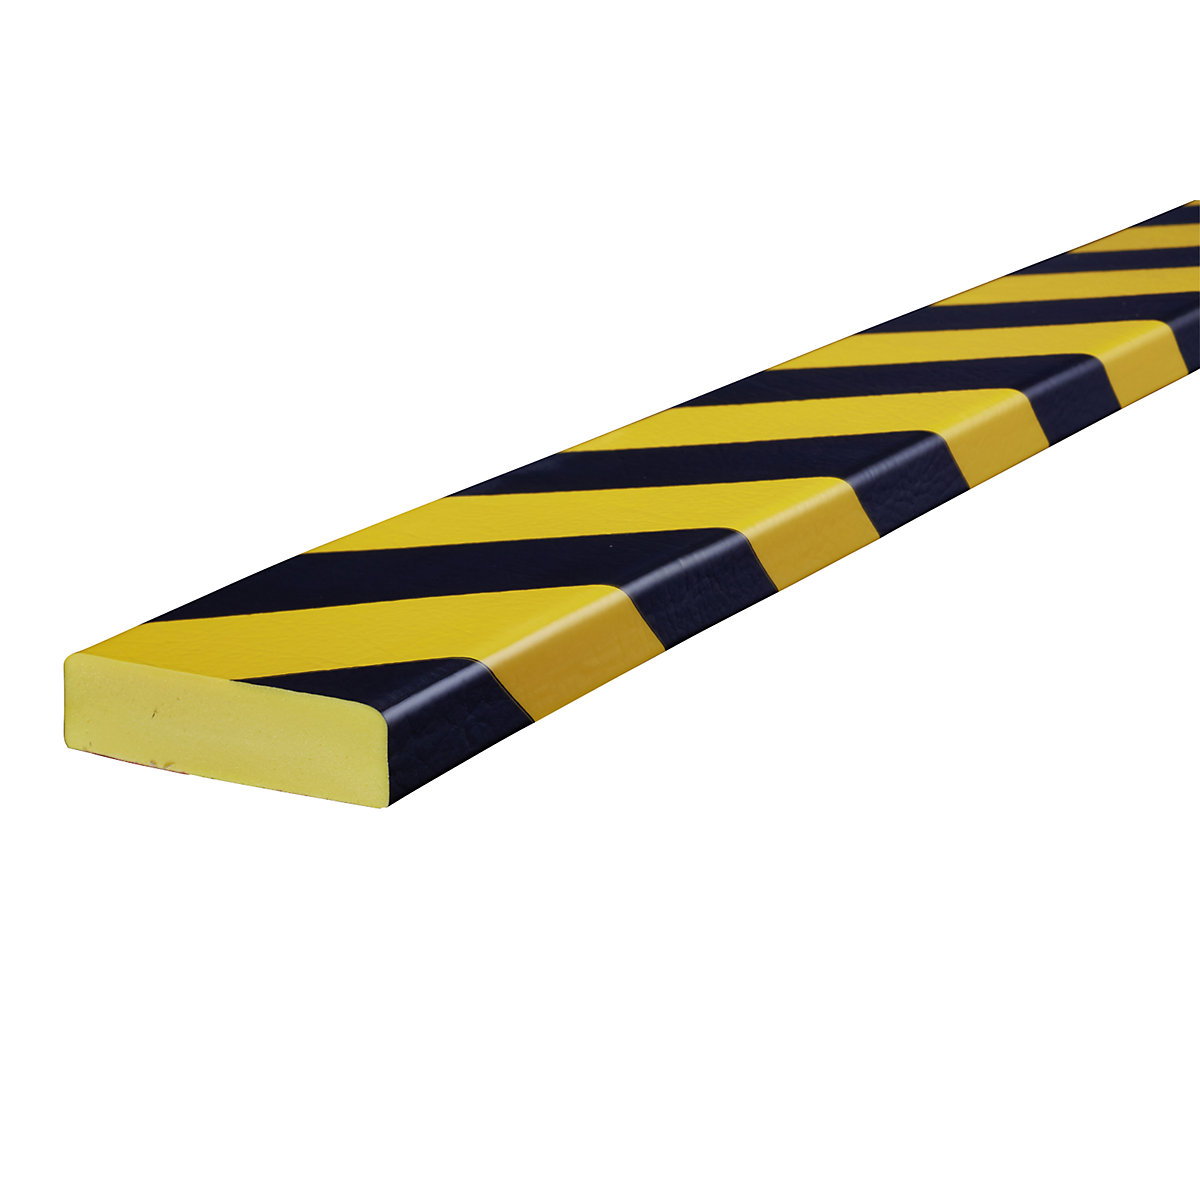 Knuffi®-oppervlaktebescherming – SHG, type S, stuk van 1 m, geel/zwart-24